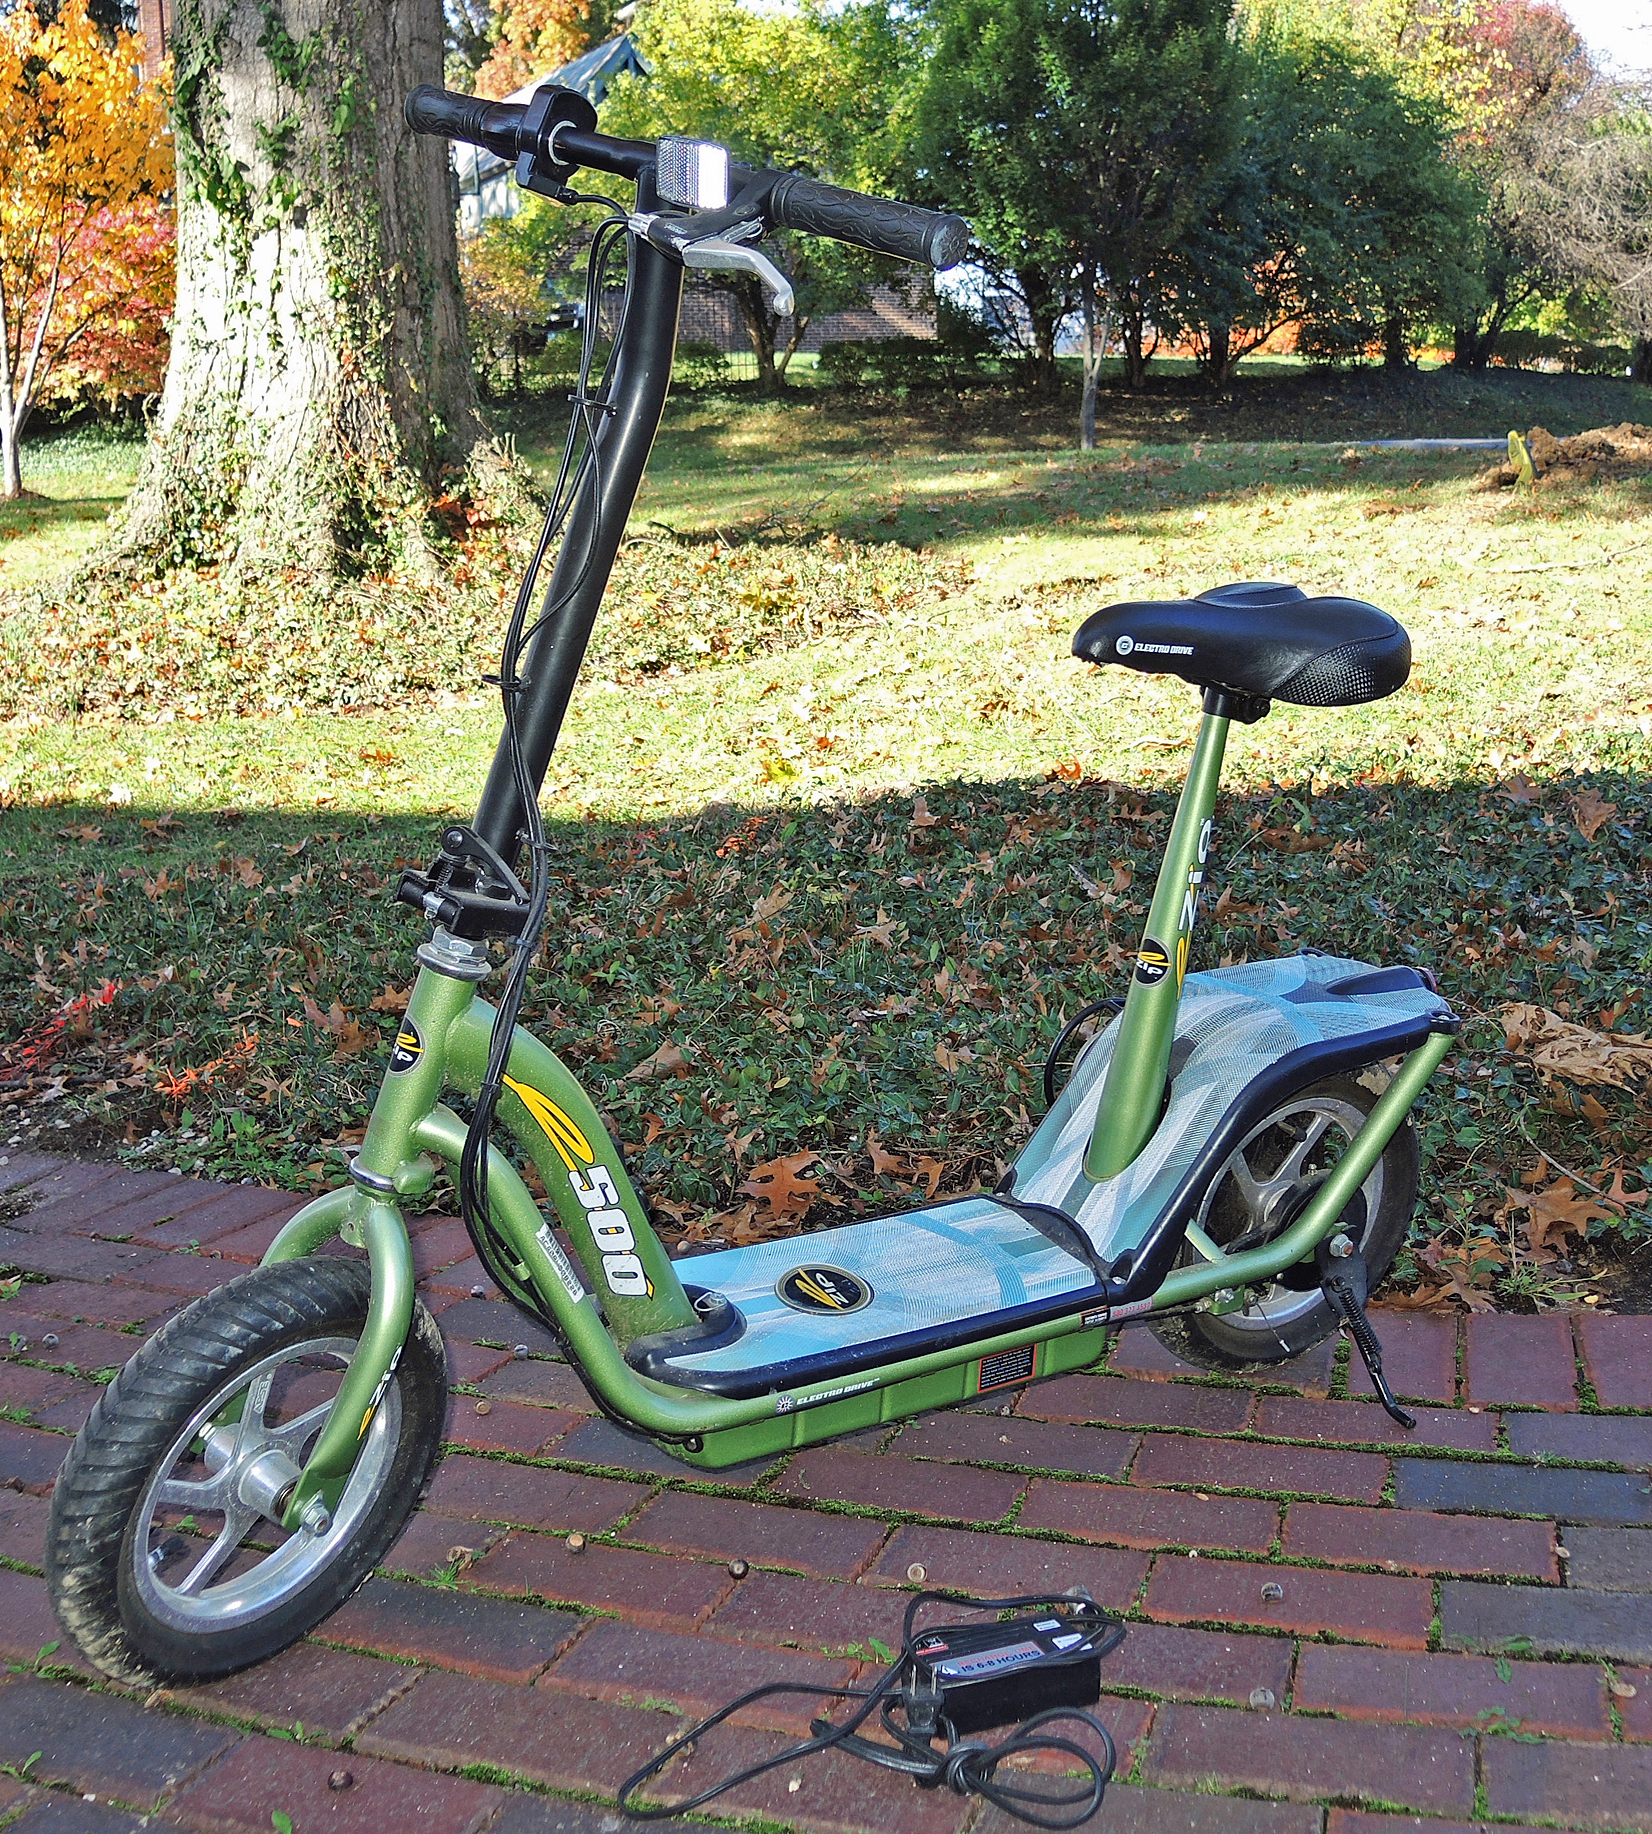 ezip scooter 400